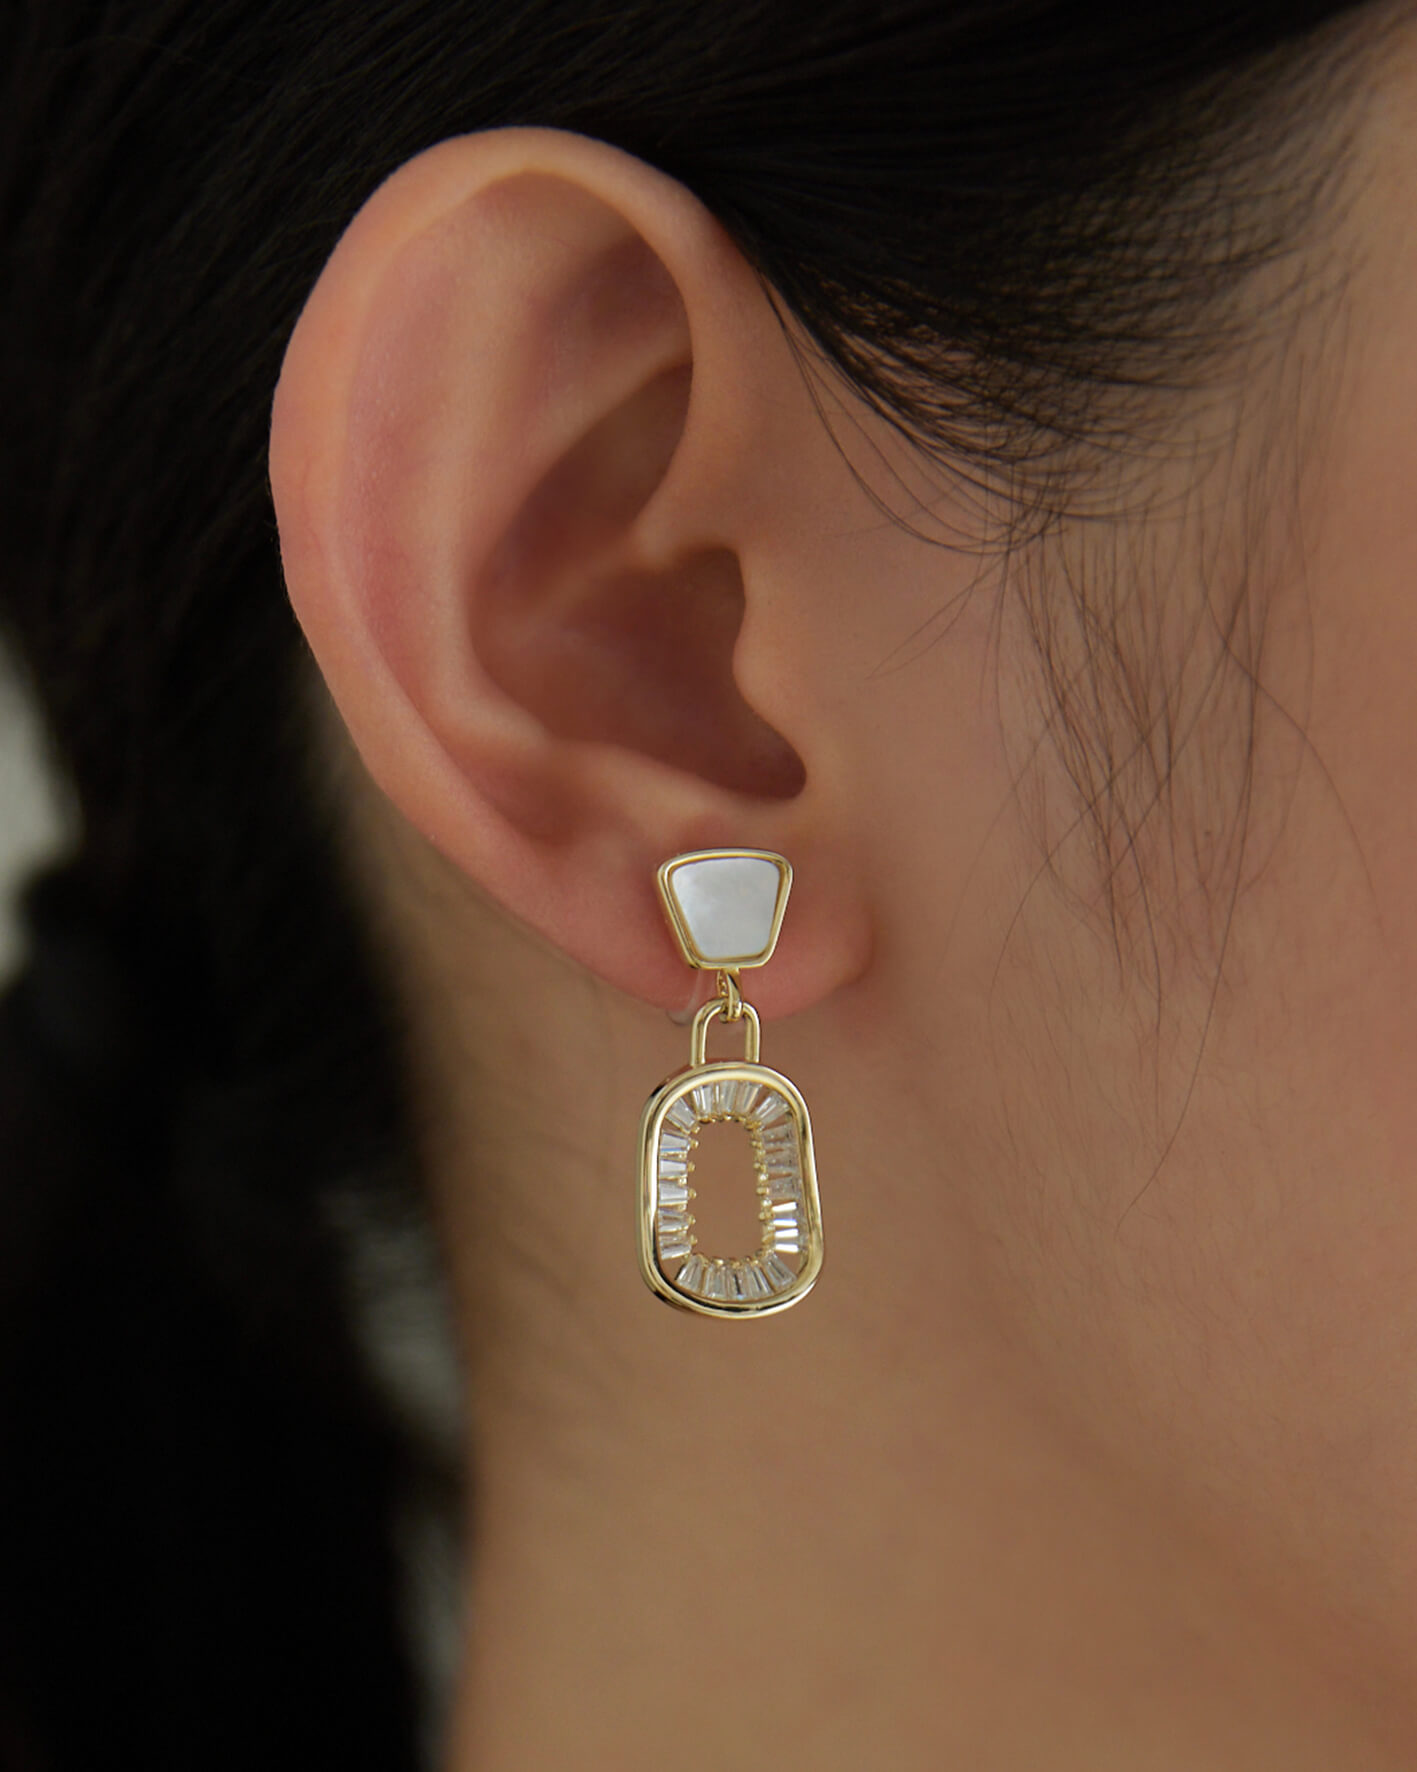 Eco安珂,韓國飾品,韓國耳環,耳針式耳環,矽膠夾耳環,透明耳夾耳環,無痛耳夾耳環,華麗矽膠夾耳環